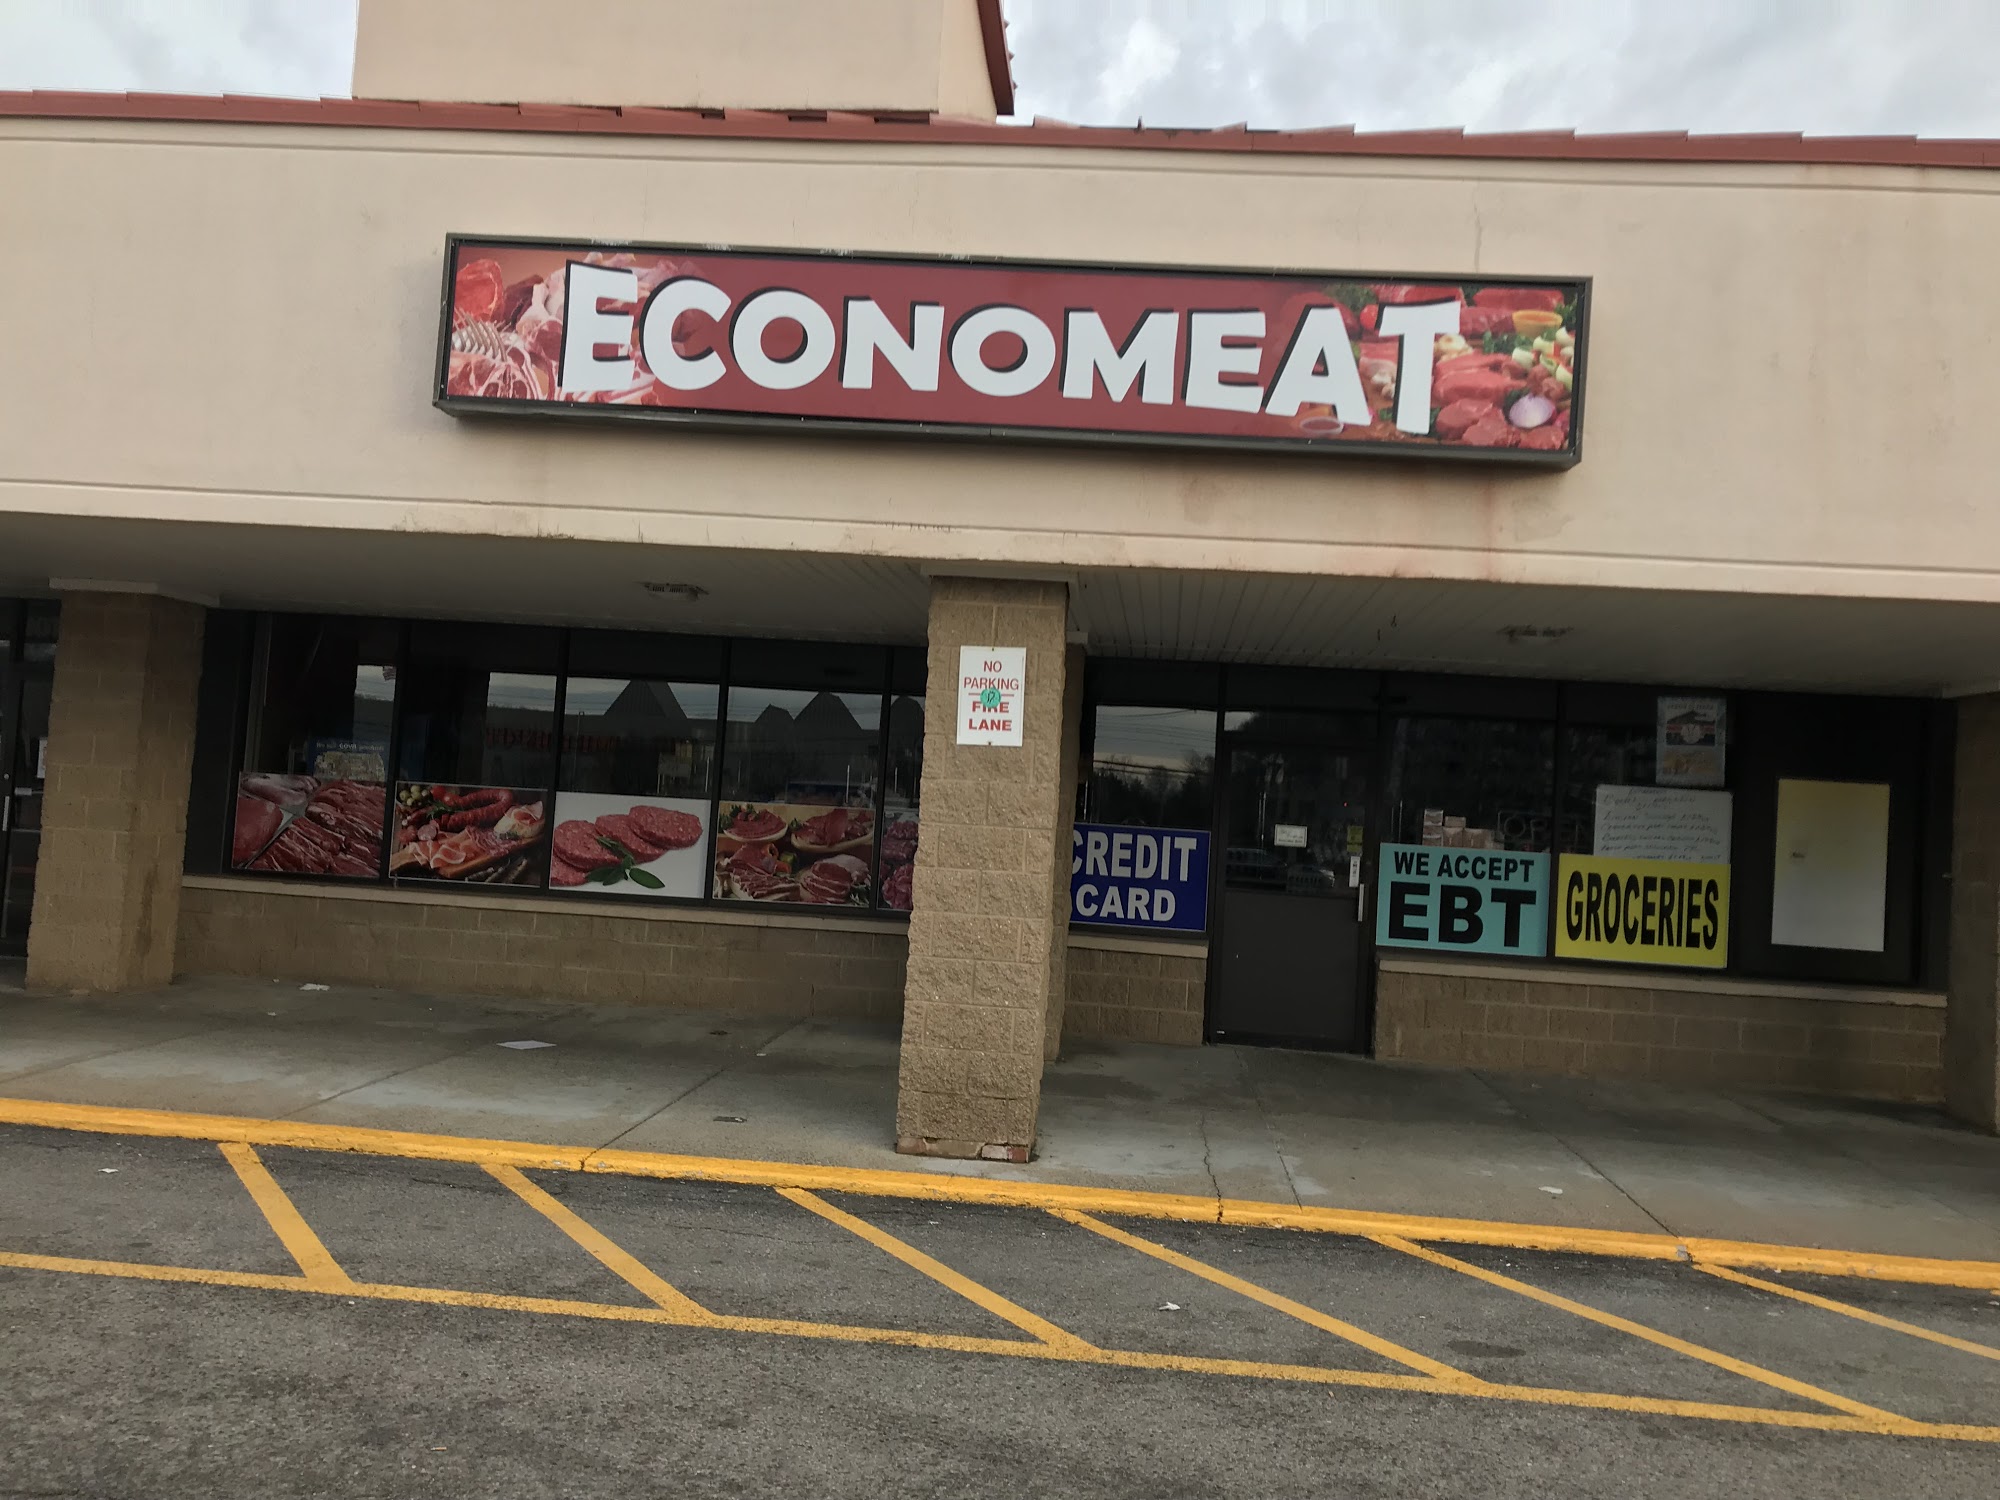 Brockton meat market/economeat market